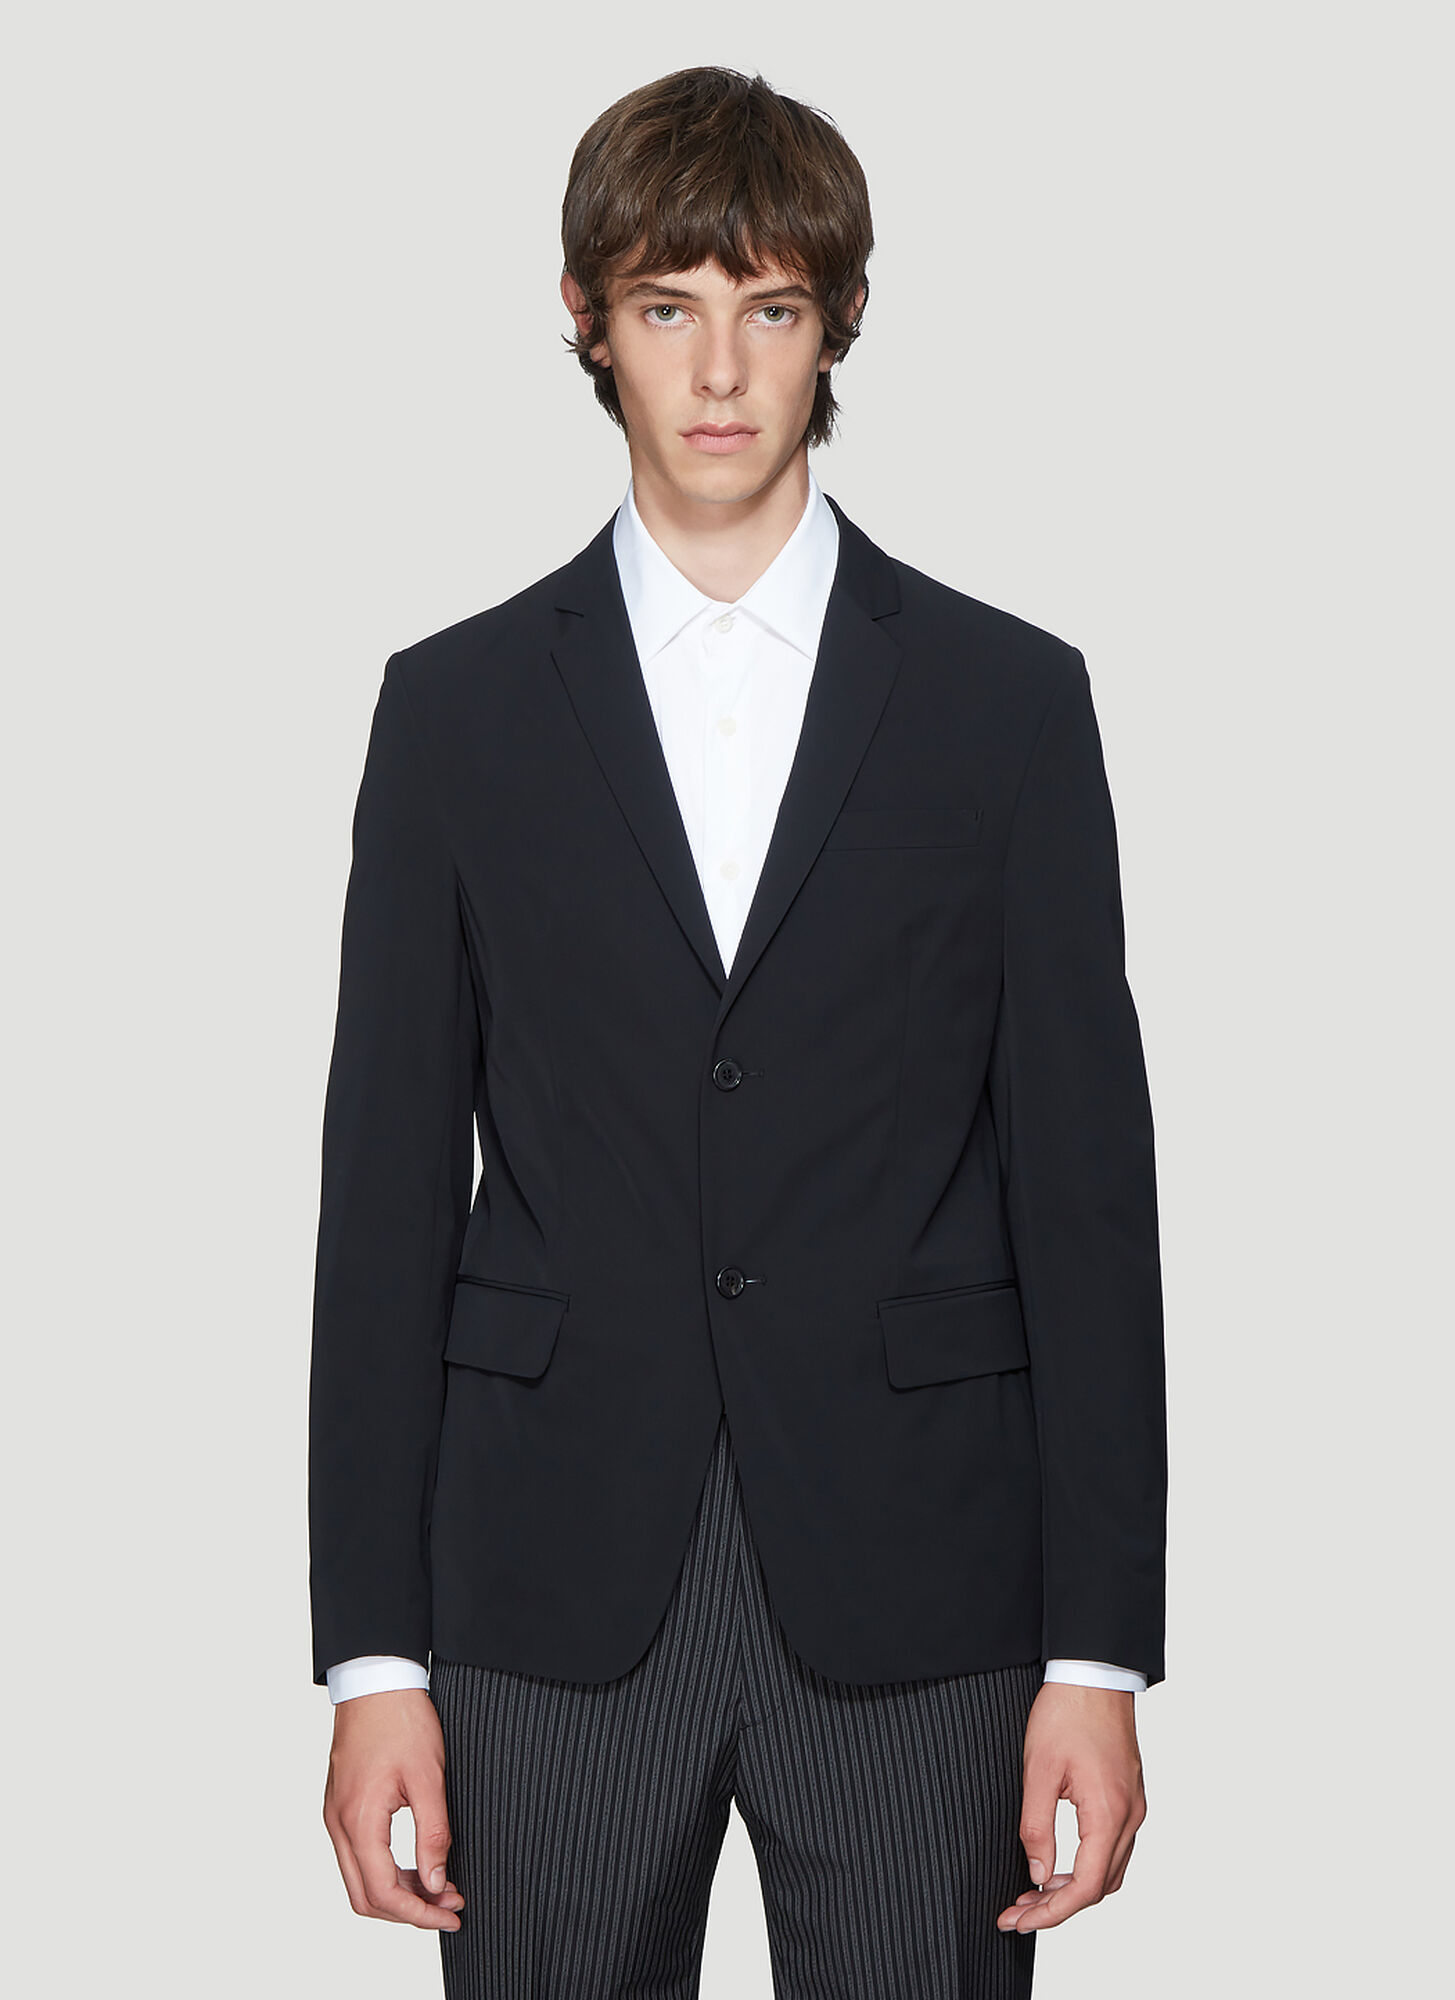 Prada Single Breasted Blazer Jacket in Black size IT - 46 | The Fashionisto